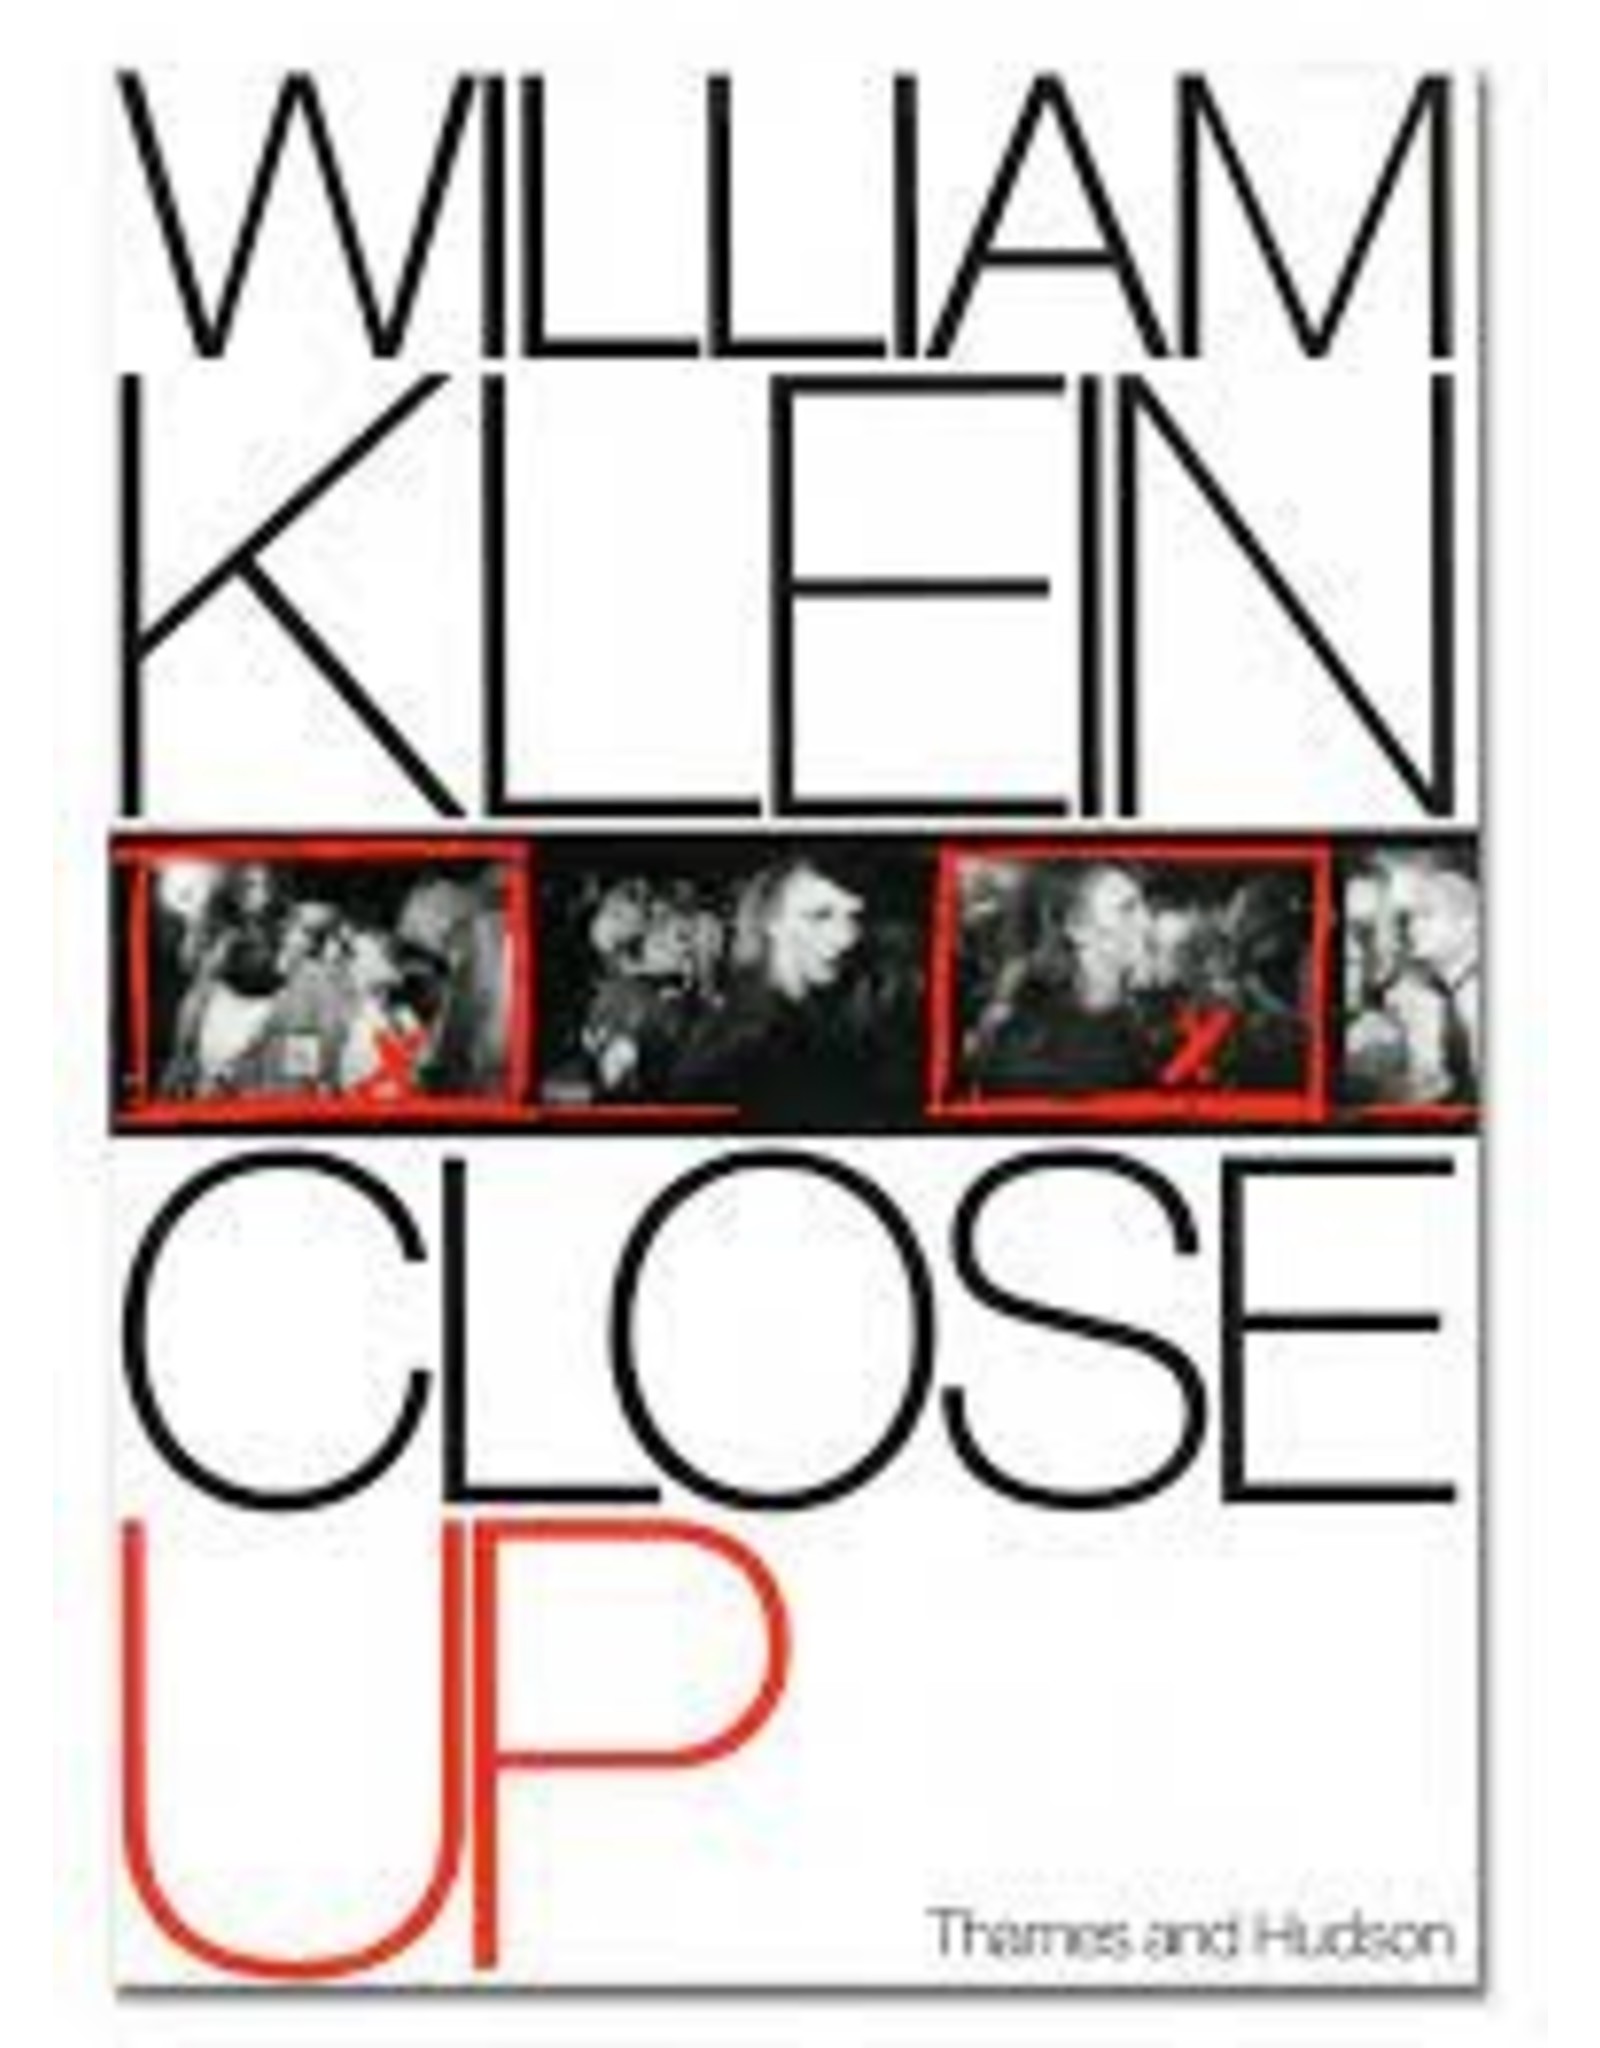 William Klein: Close Up